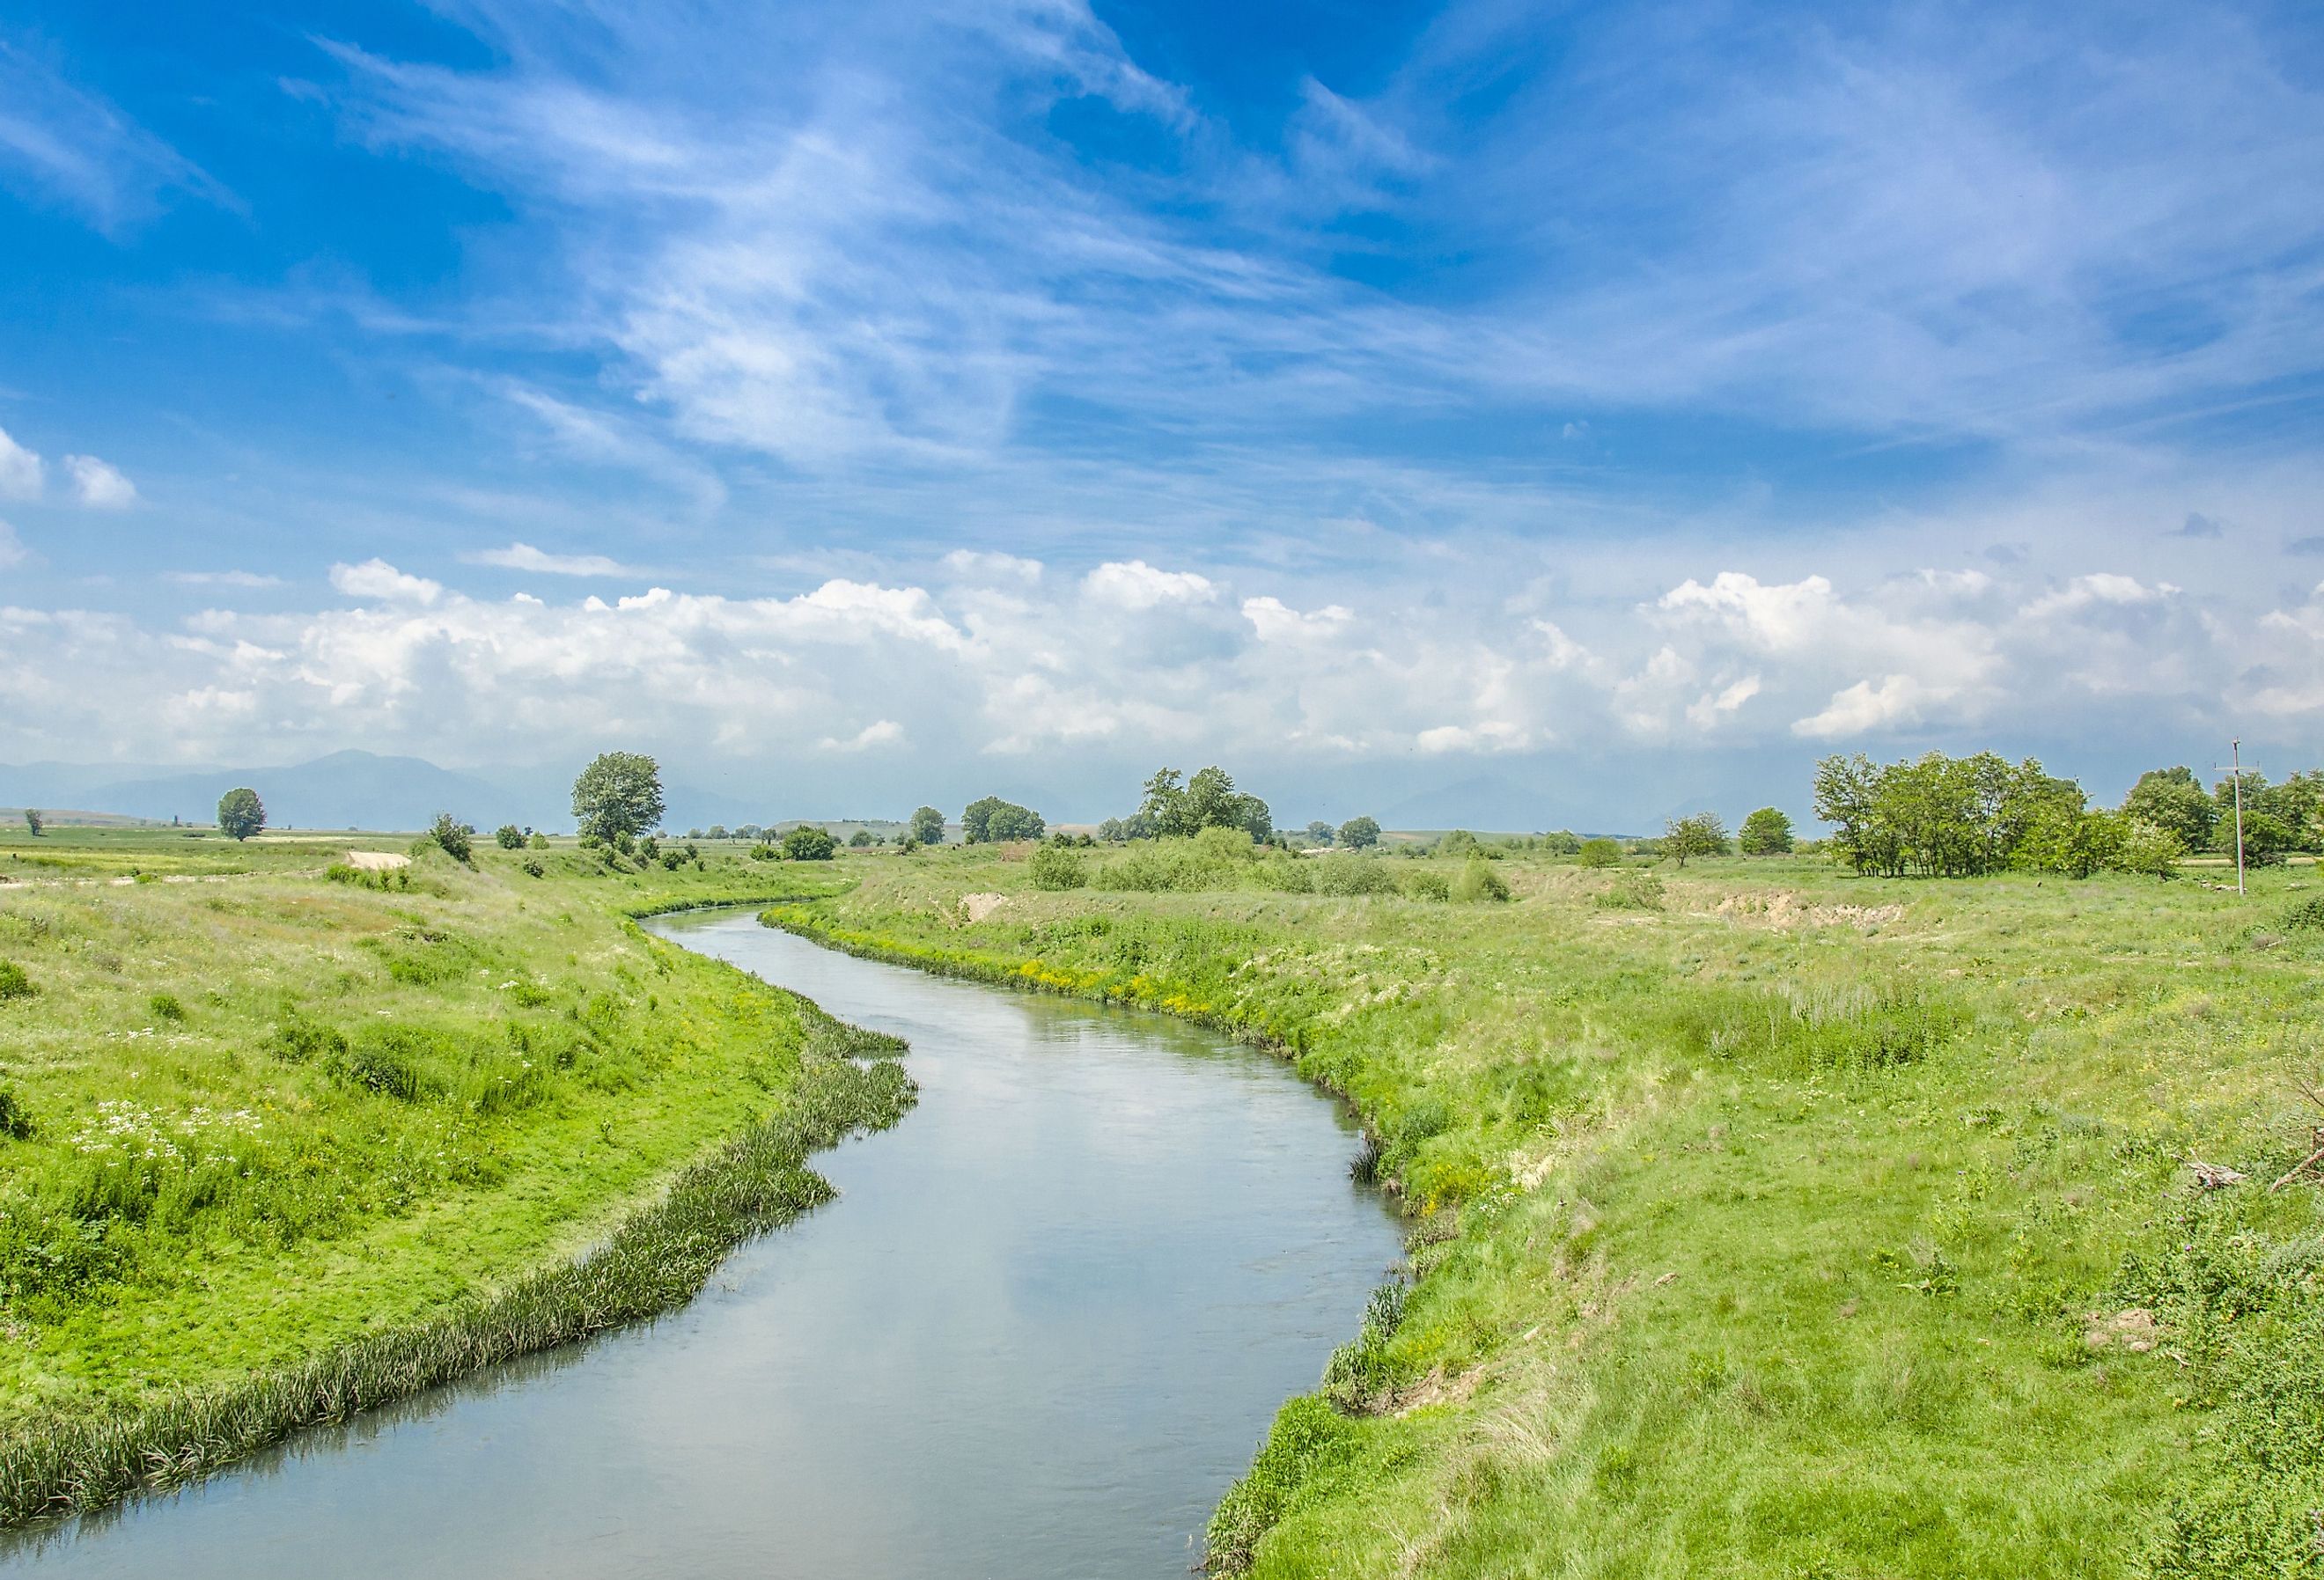 Crna River weaves through grass in North Macedona. Image credit Pargovski Jove via Shutterstock. 